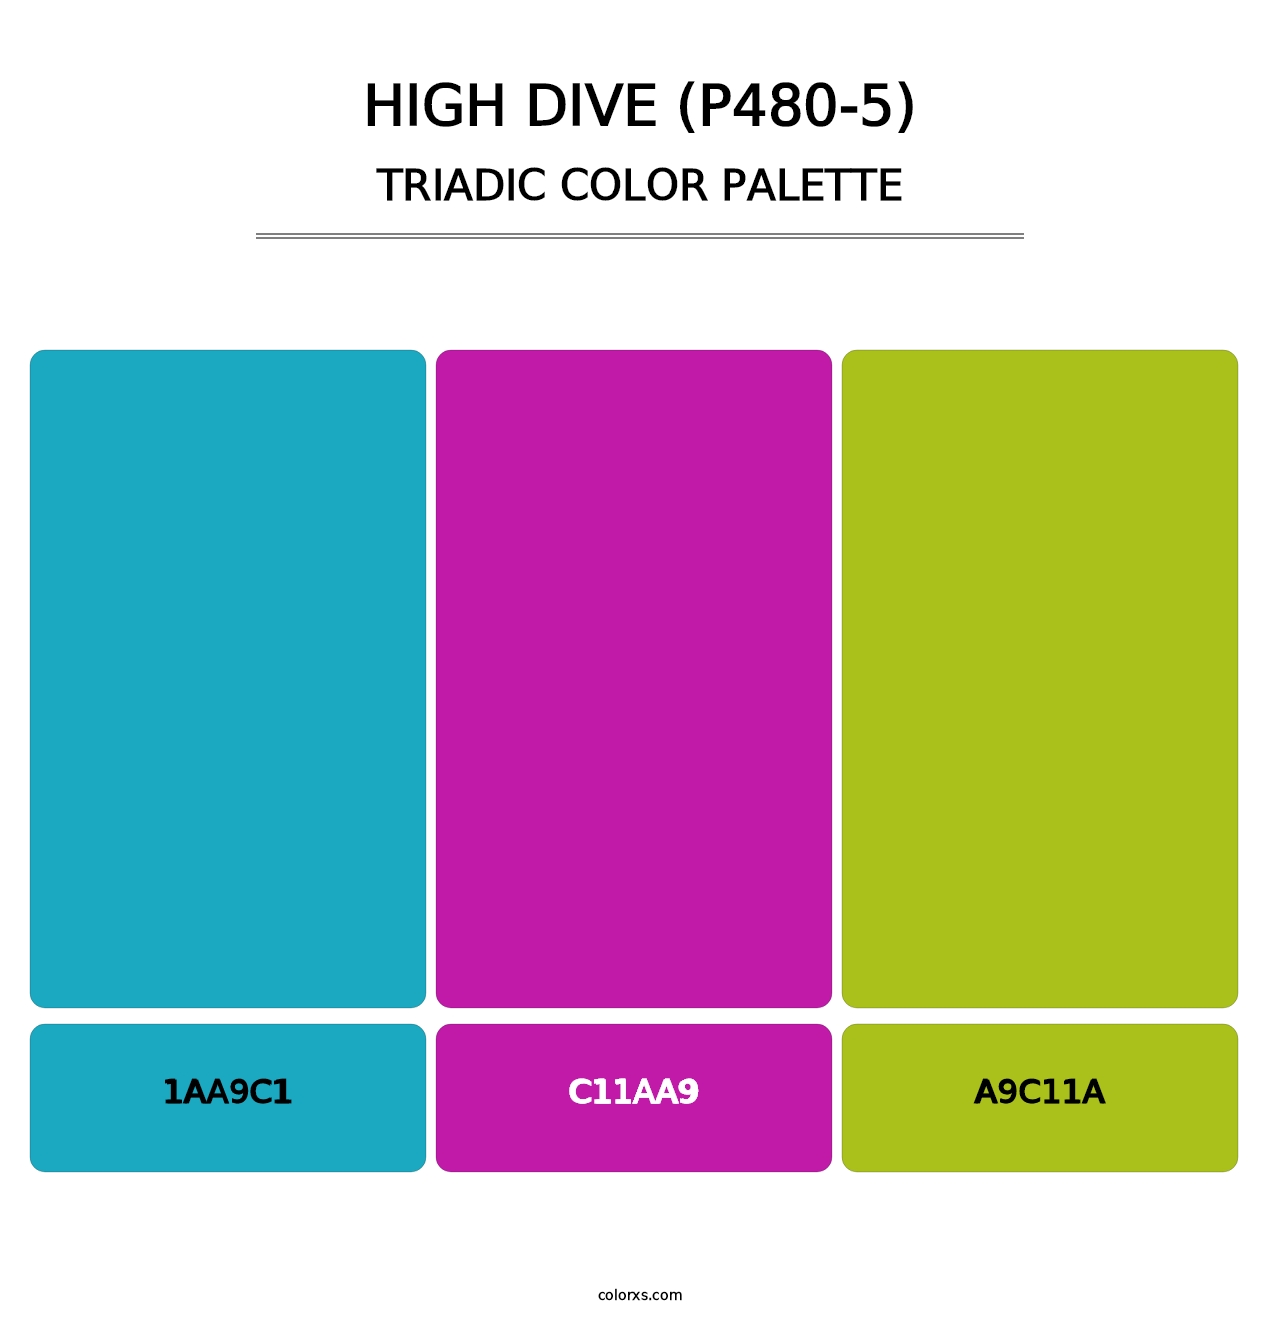 High Dive (P480-5) - Triadic Color Palette